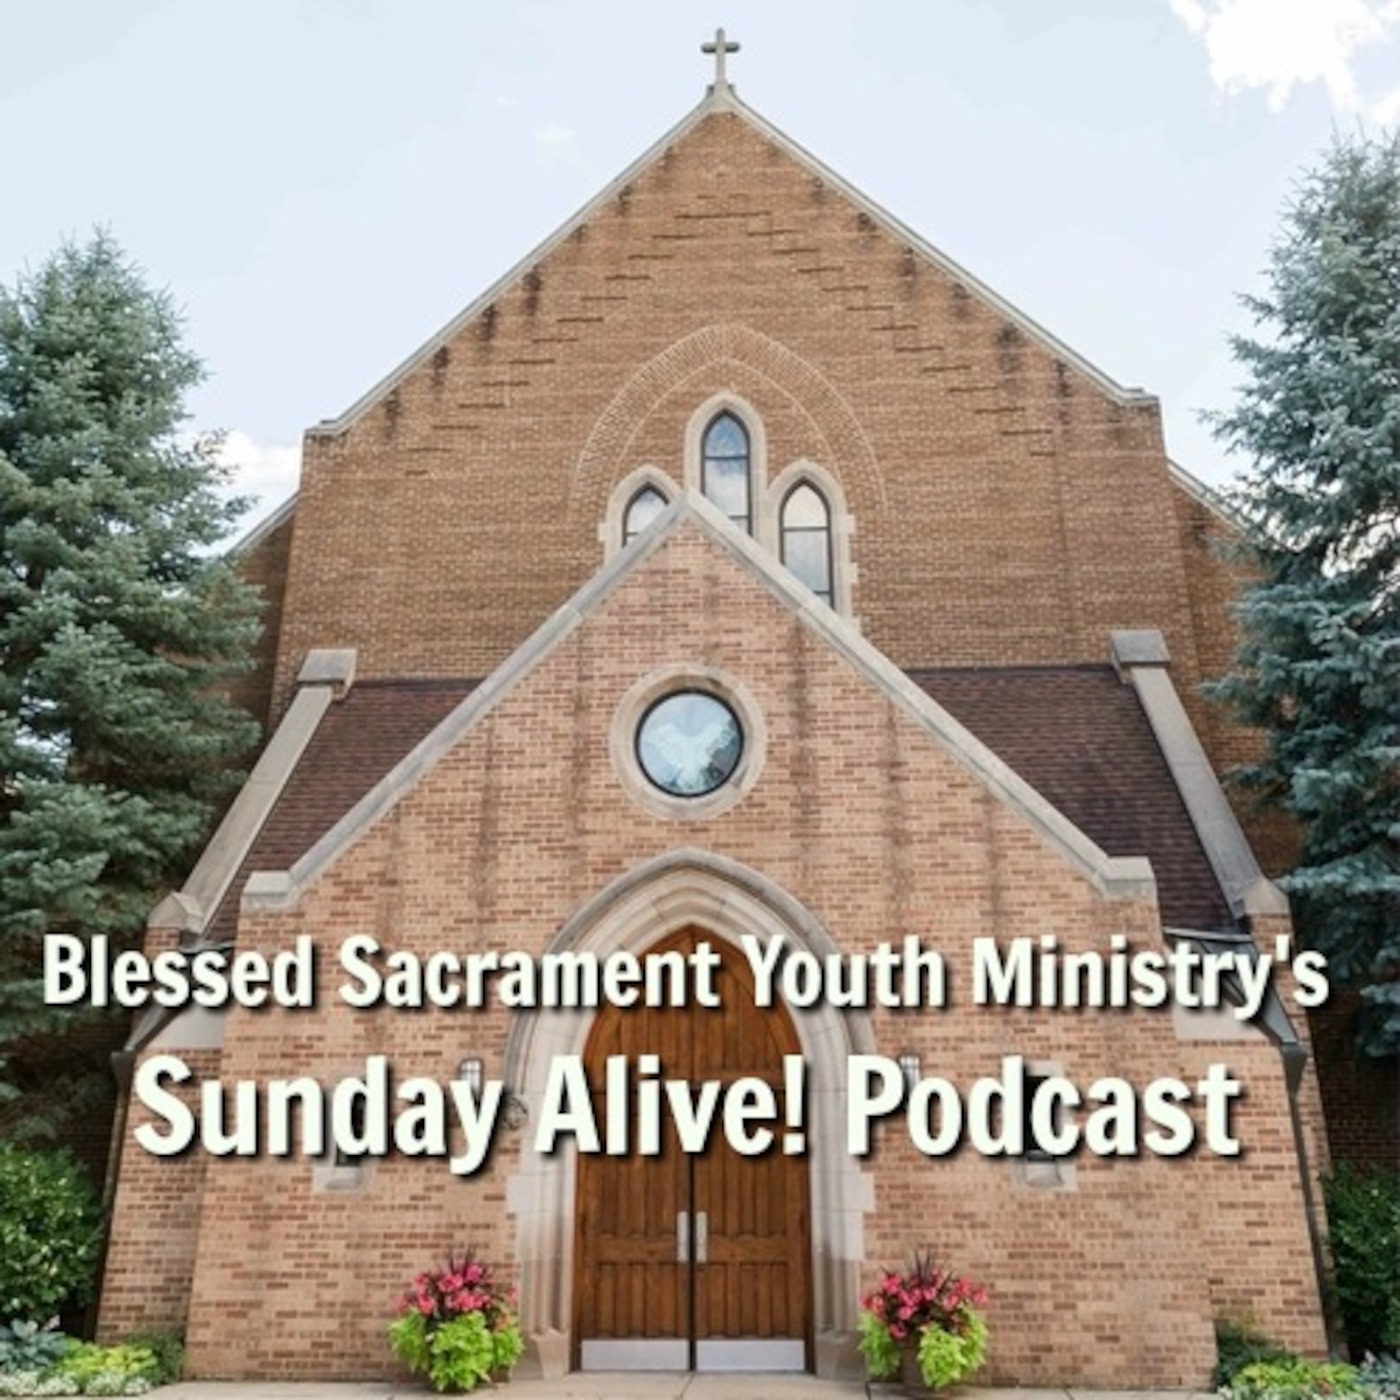 The Sunday Alive Podcast - Sunday, February 2, 2020 - the Fourth Sunday of Ordinary Time